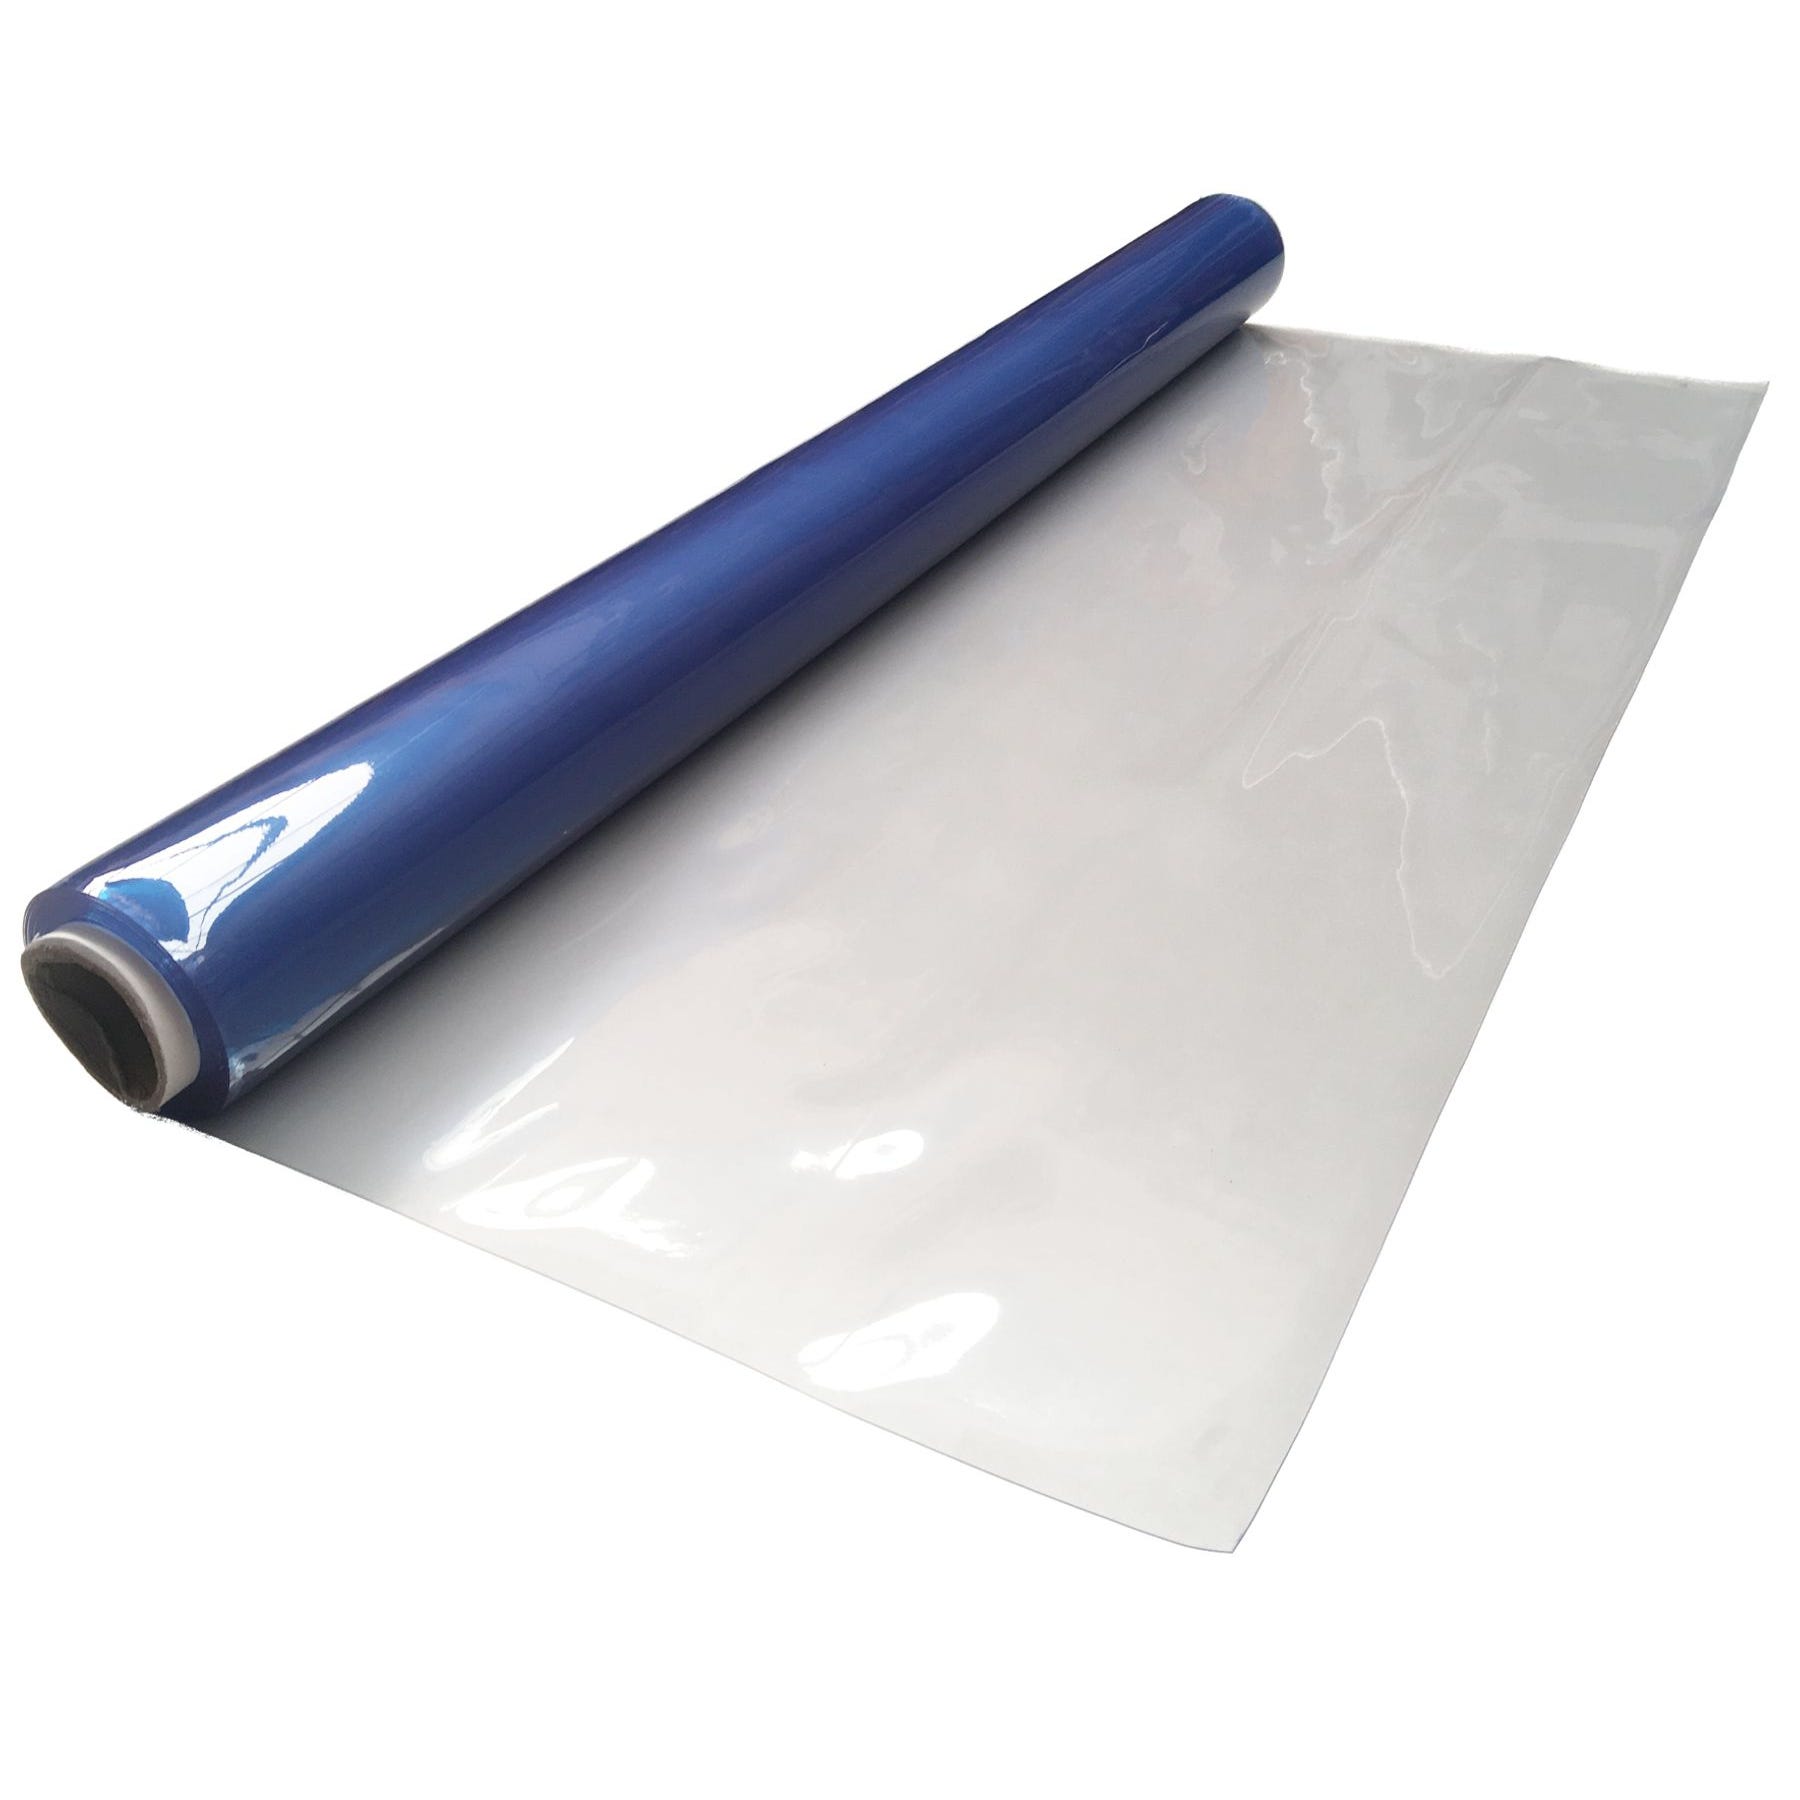 Plástico Transparente Flexible para toldos en 1,40 de Ancho. (Lona